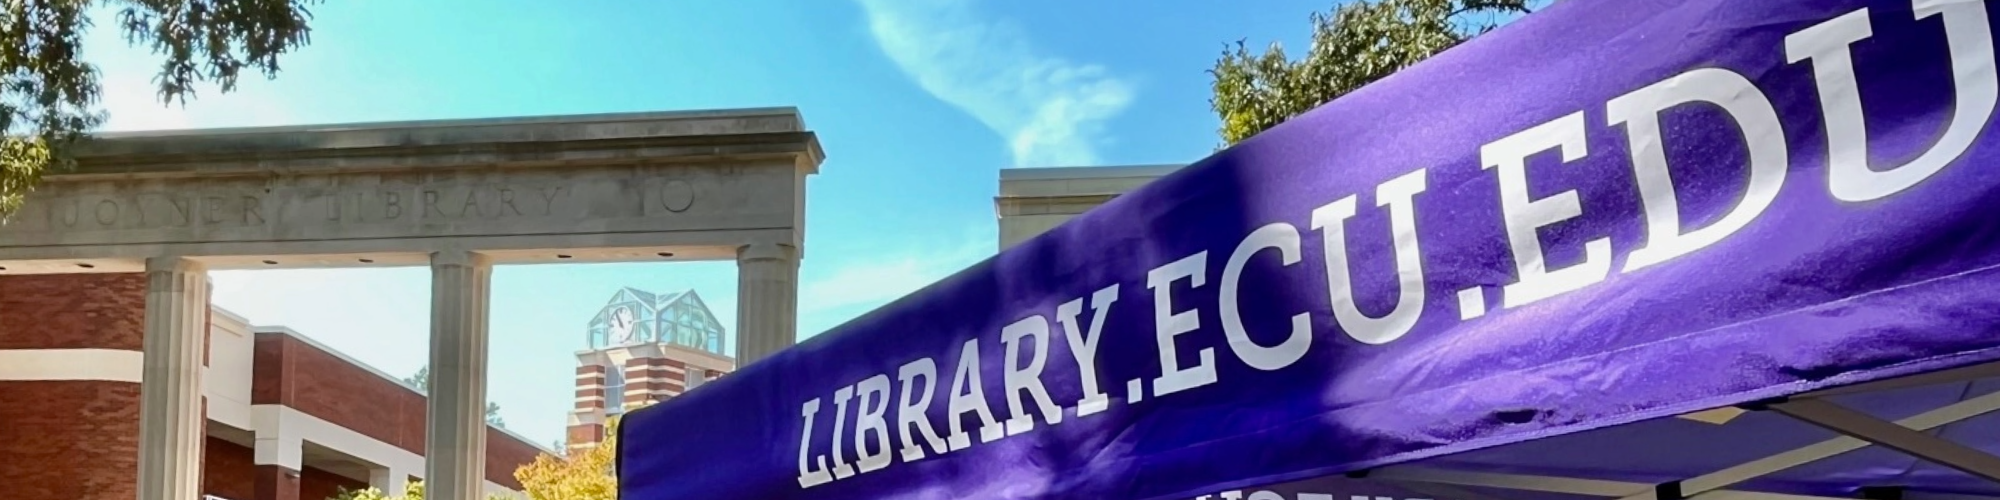 Library.ecu.edu